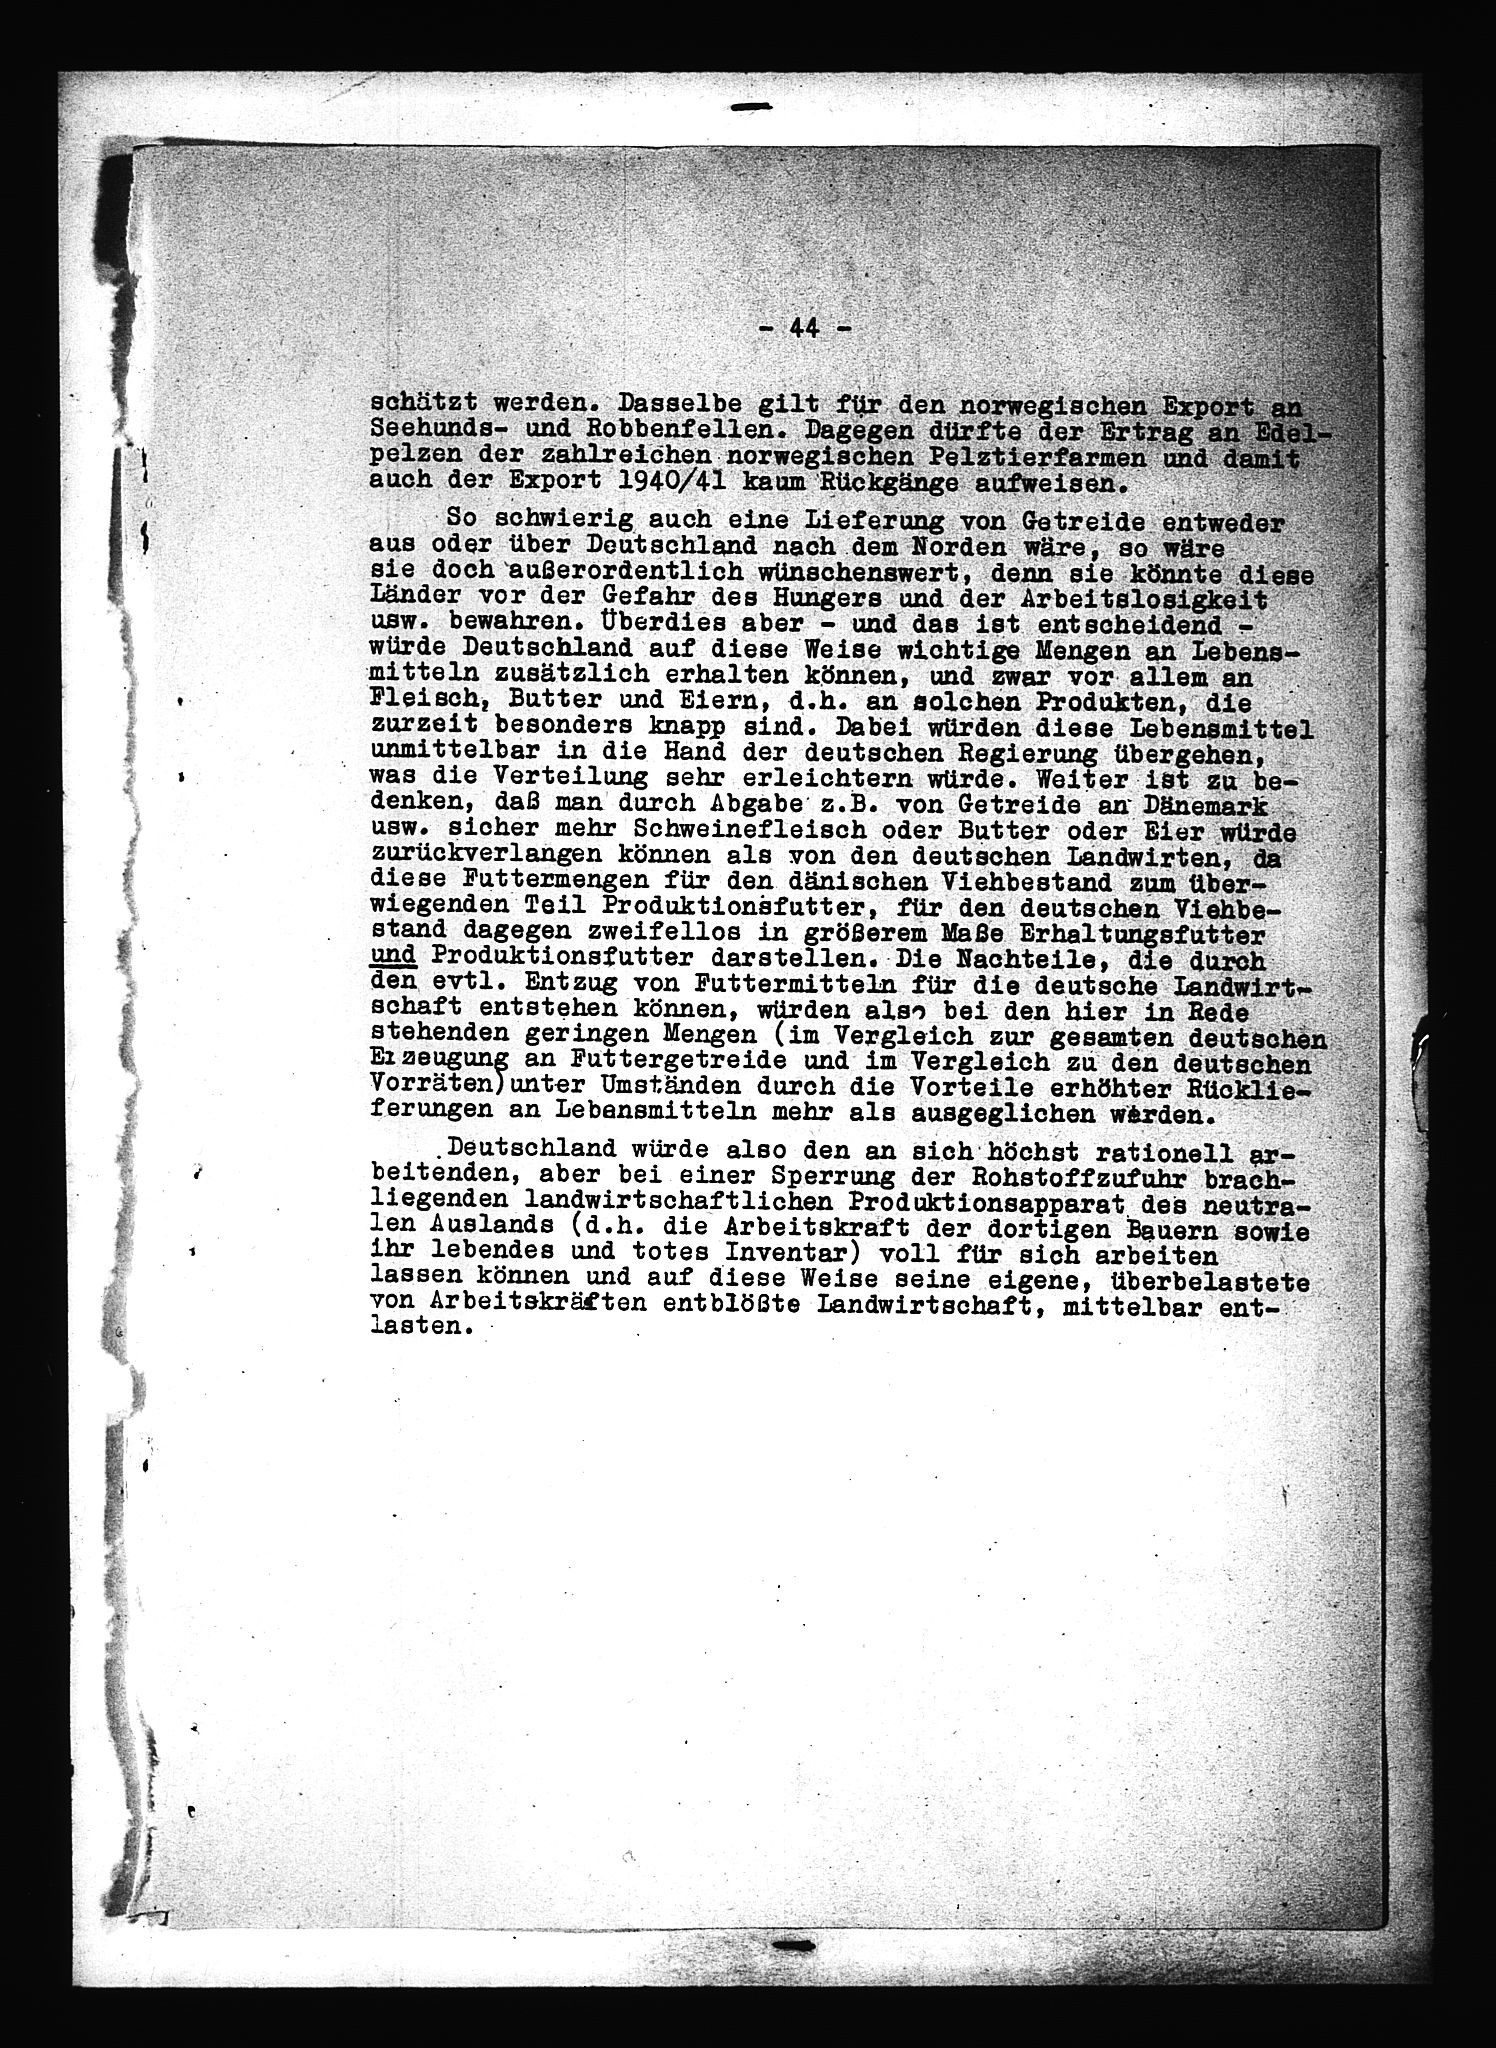 Documents Section, RA/RAFA-2200/V/L0090: Amerikansk mikrofilm "Captured German Documents".
Box No. 952.  FKA jnr. 59/1955., 1940, p. 299